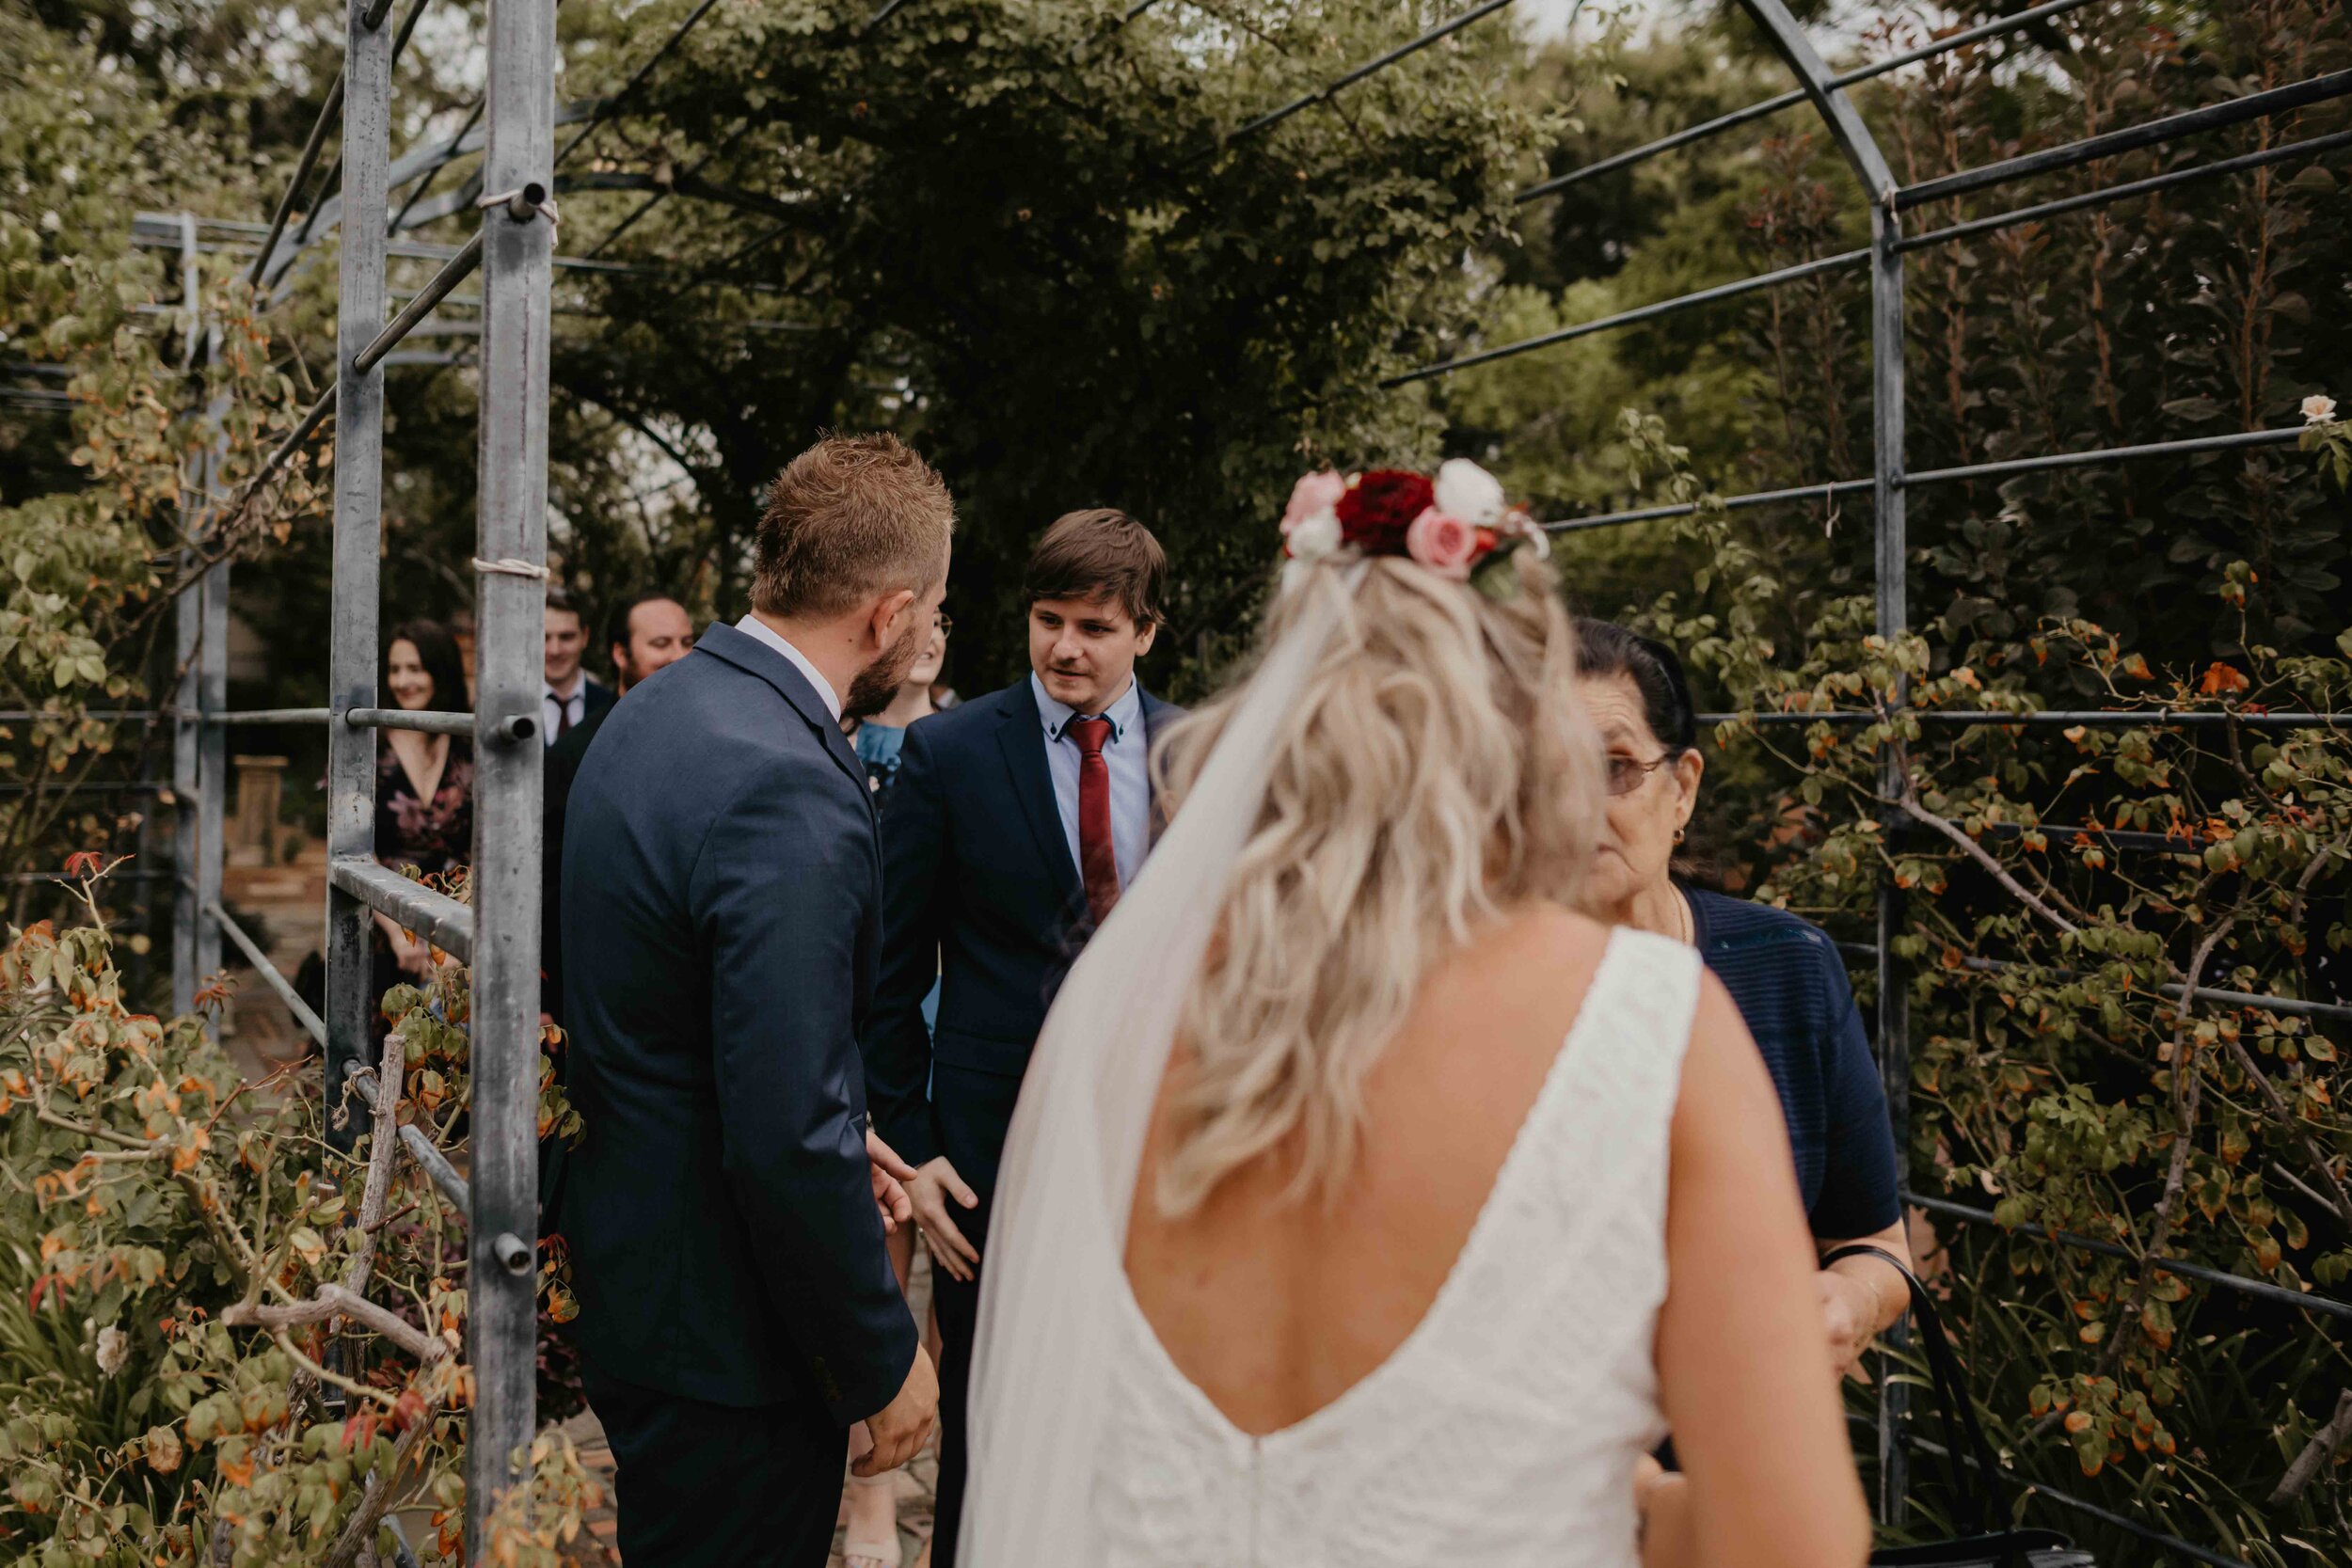 Barrett Lane wedding | Amy Skinner Photography-474.jpg